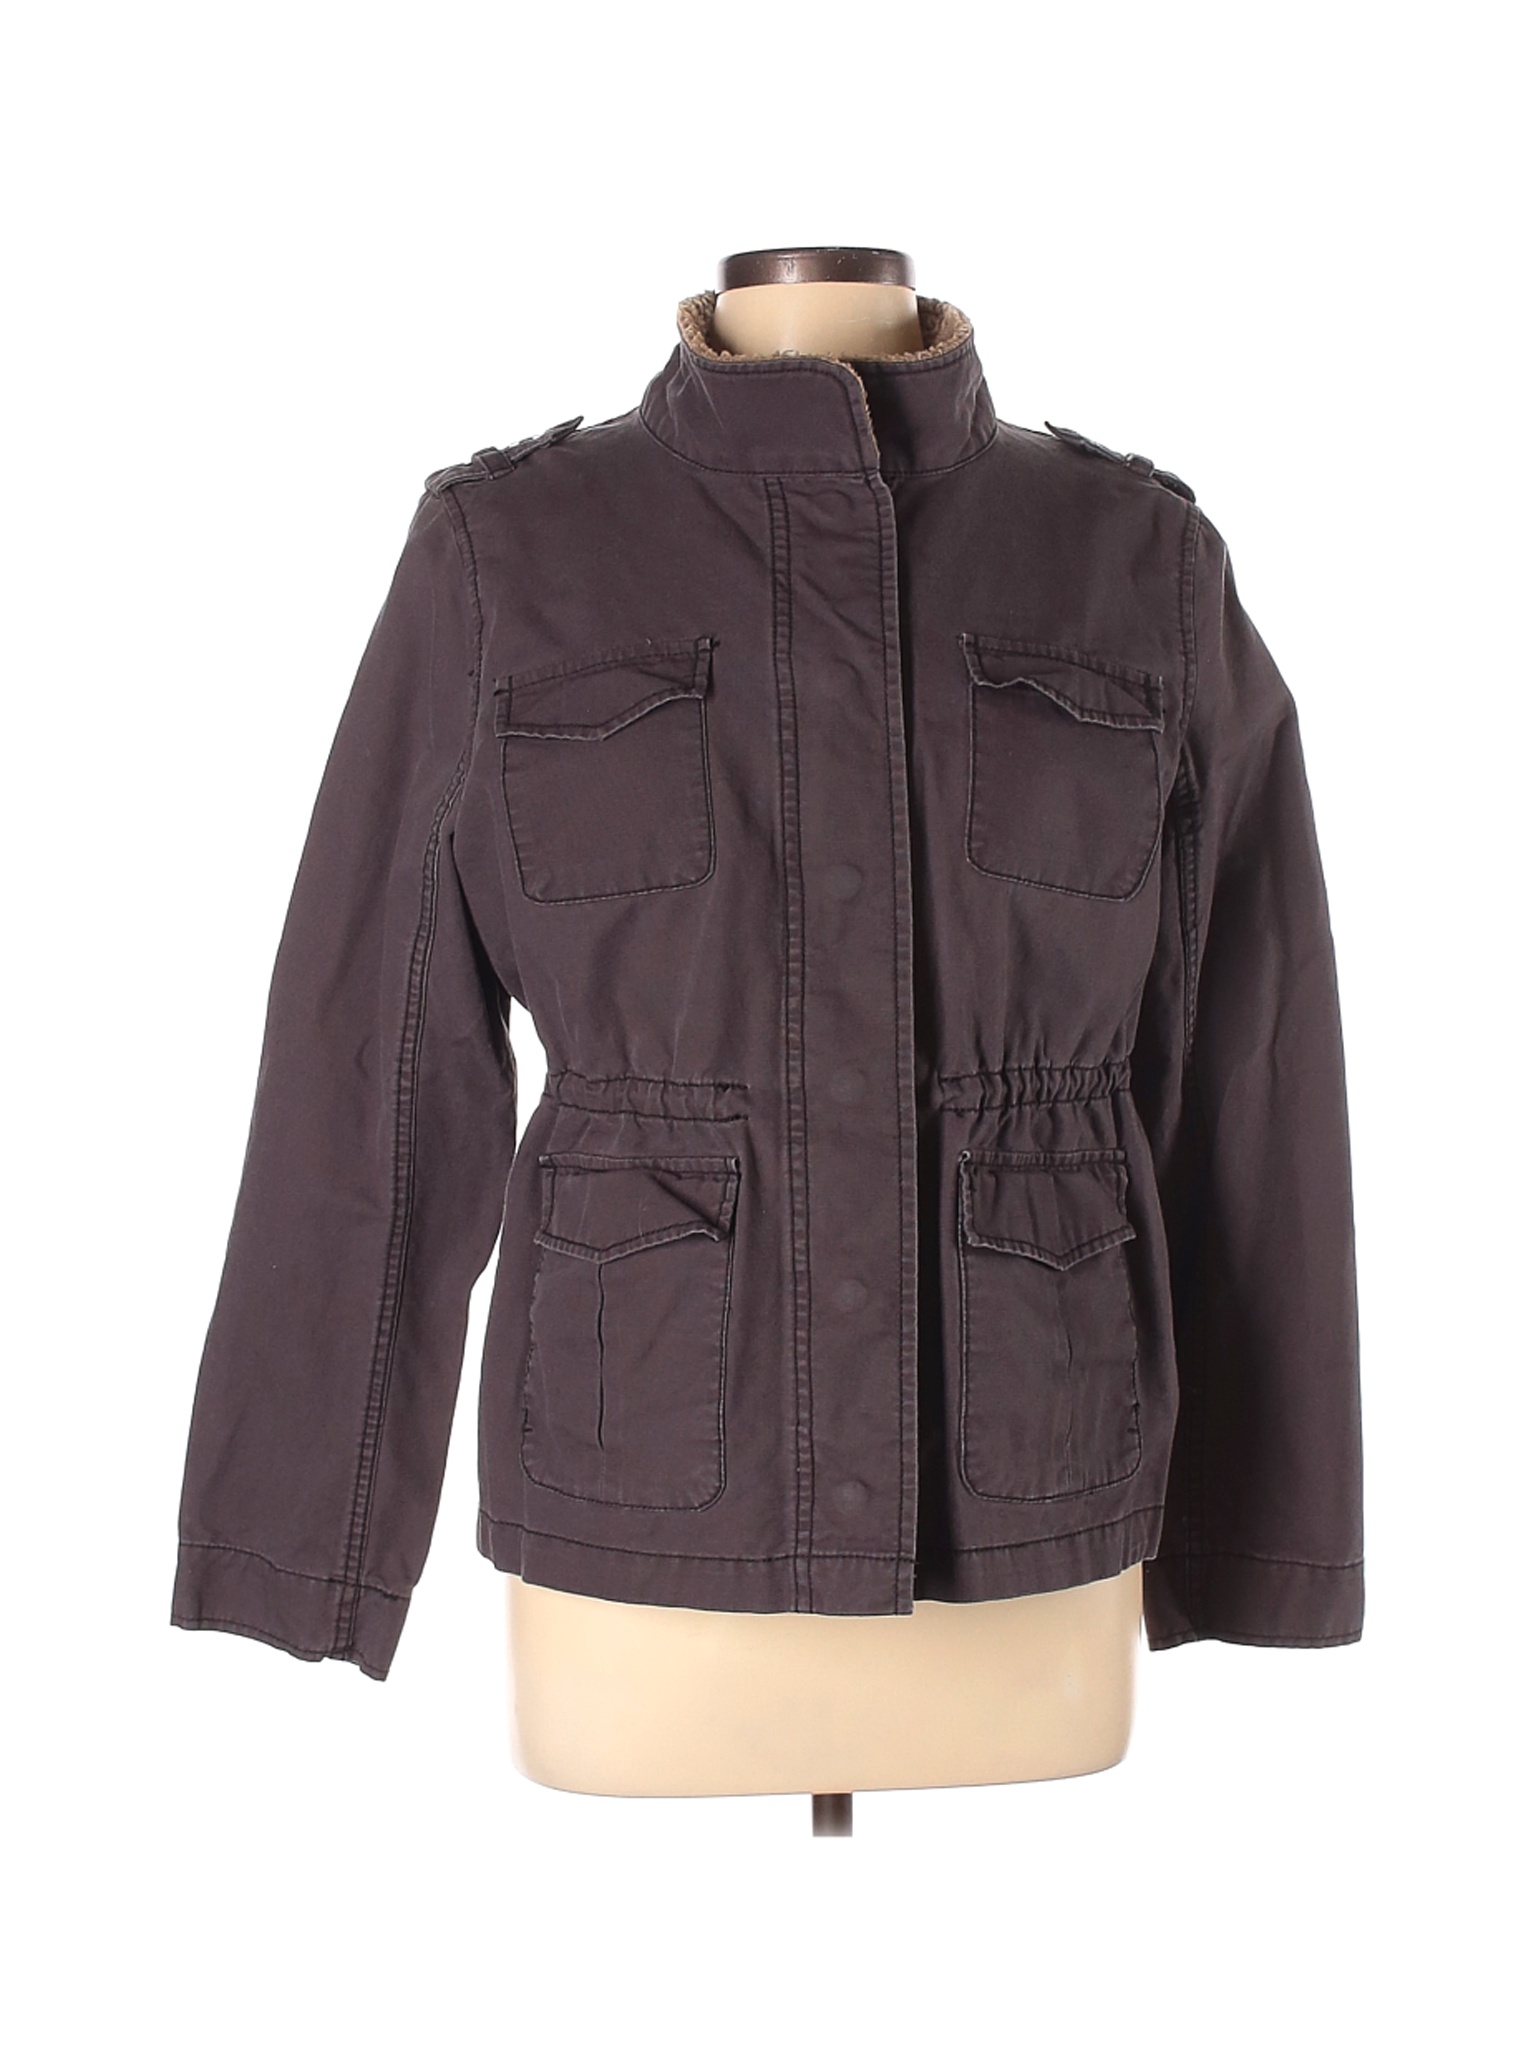 Ruff Hewn Women Brown Jacket L | eBay